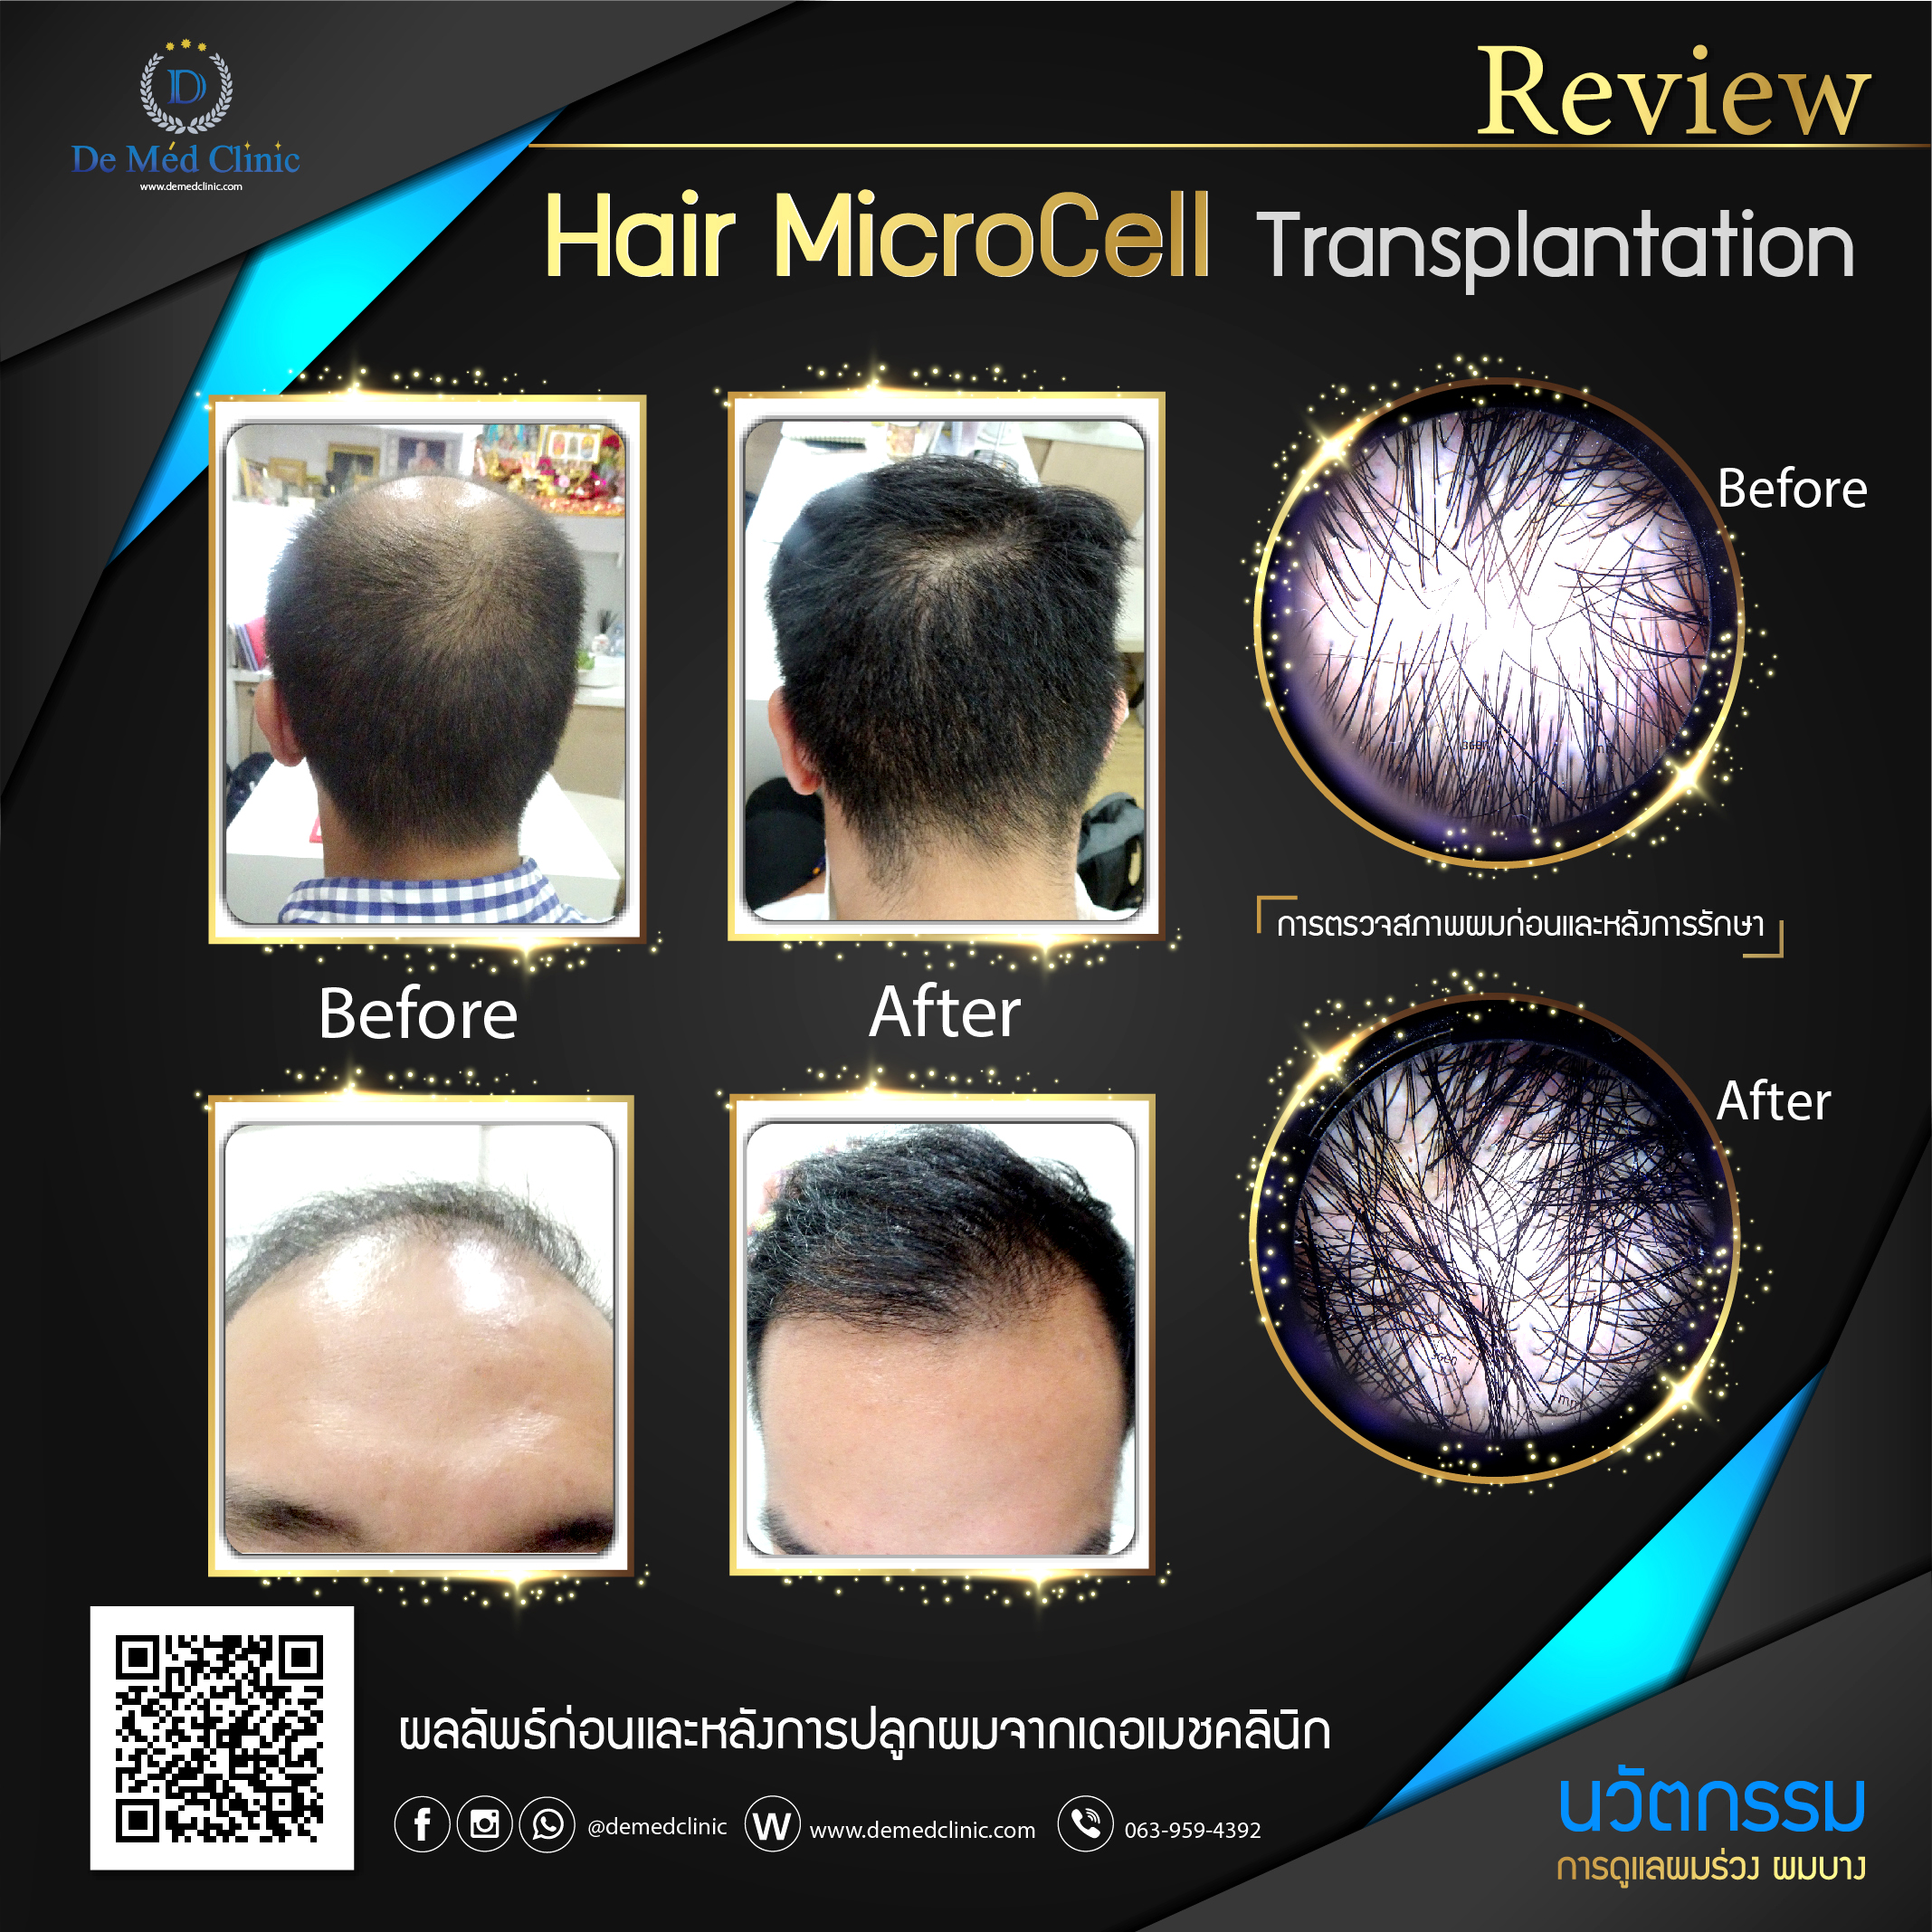  Hair MicroCell Transplantation (HMT)